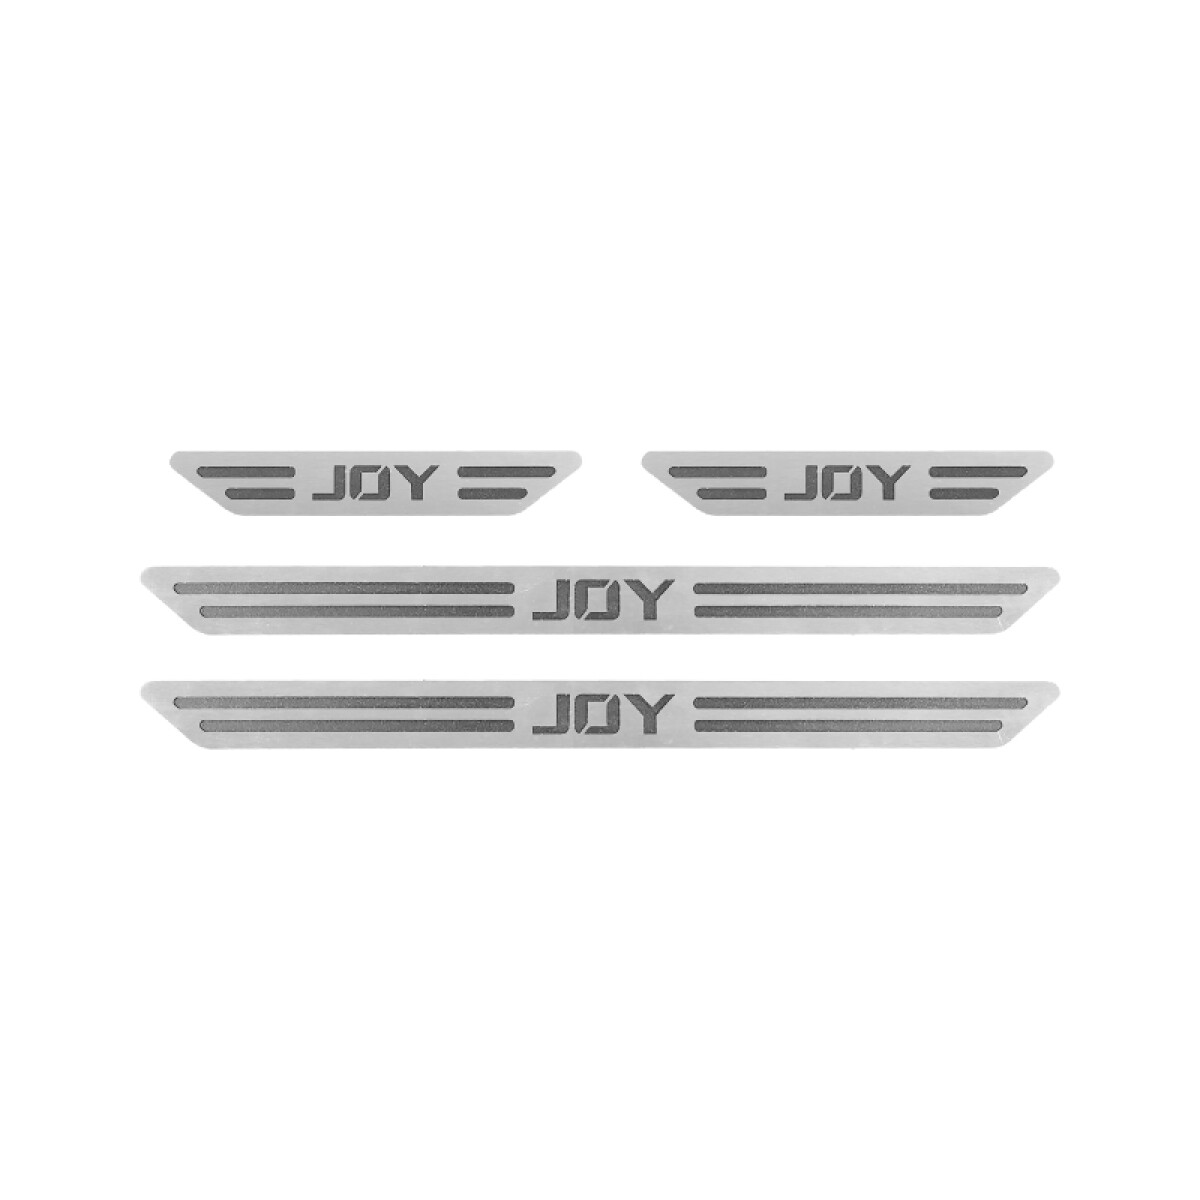 Cubre Zocalo Chevrolet Joy 